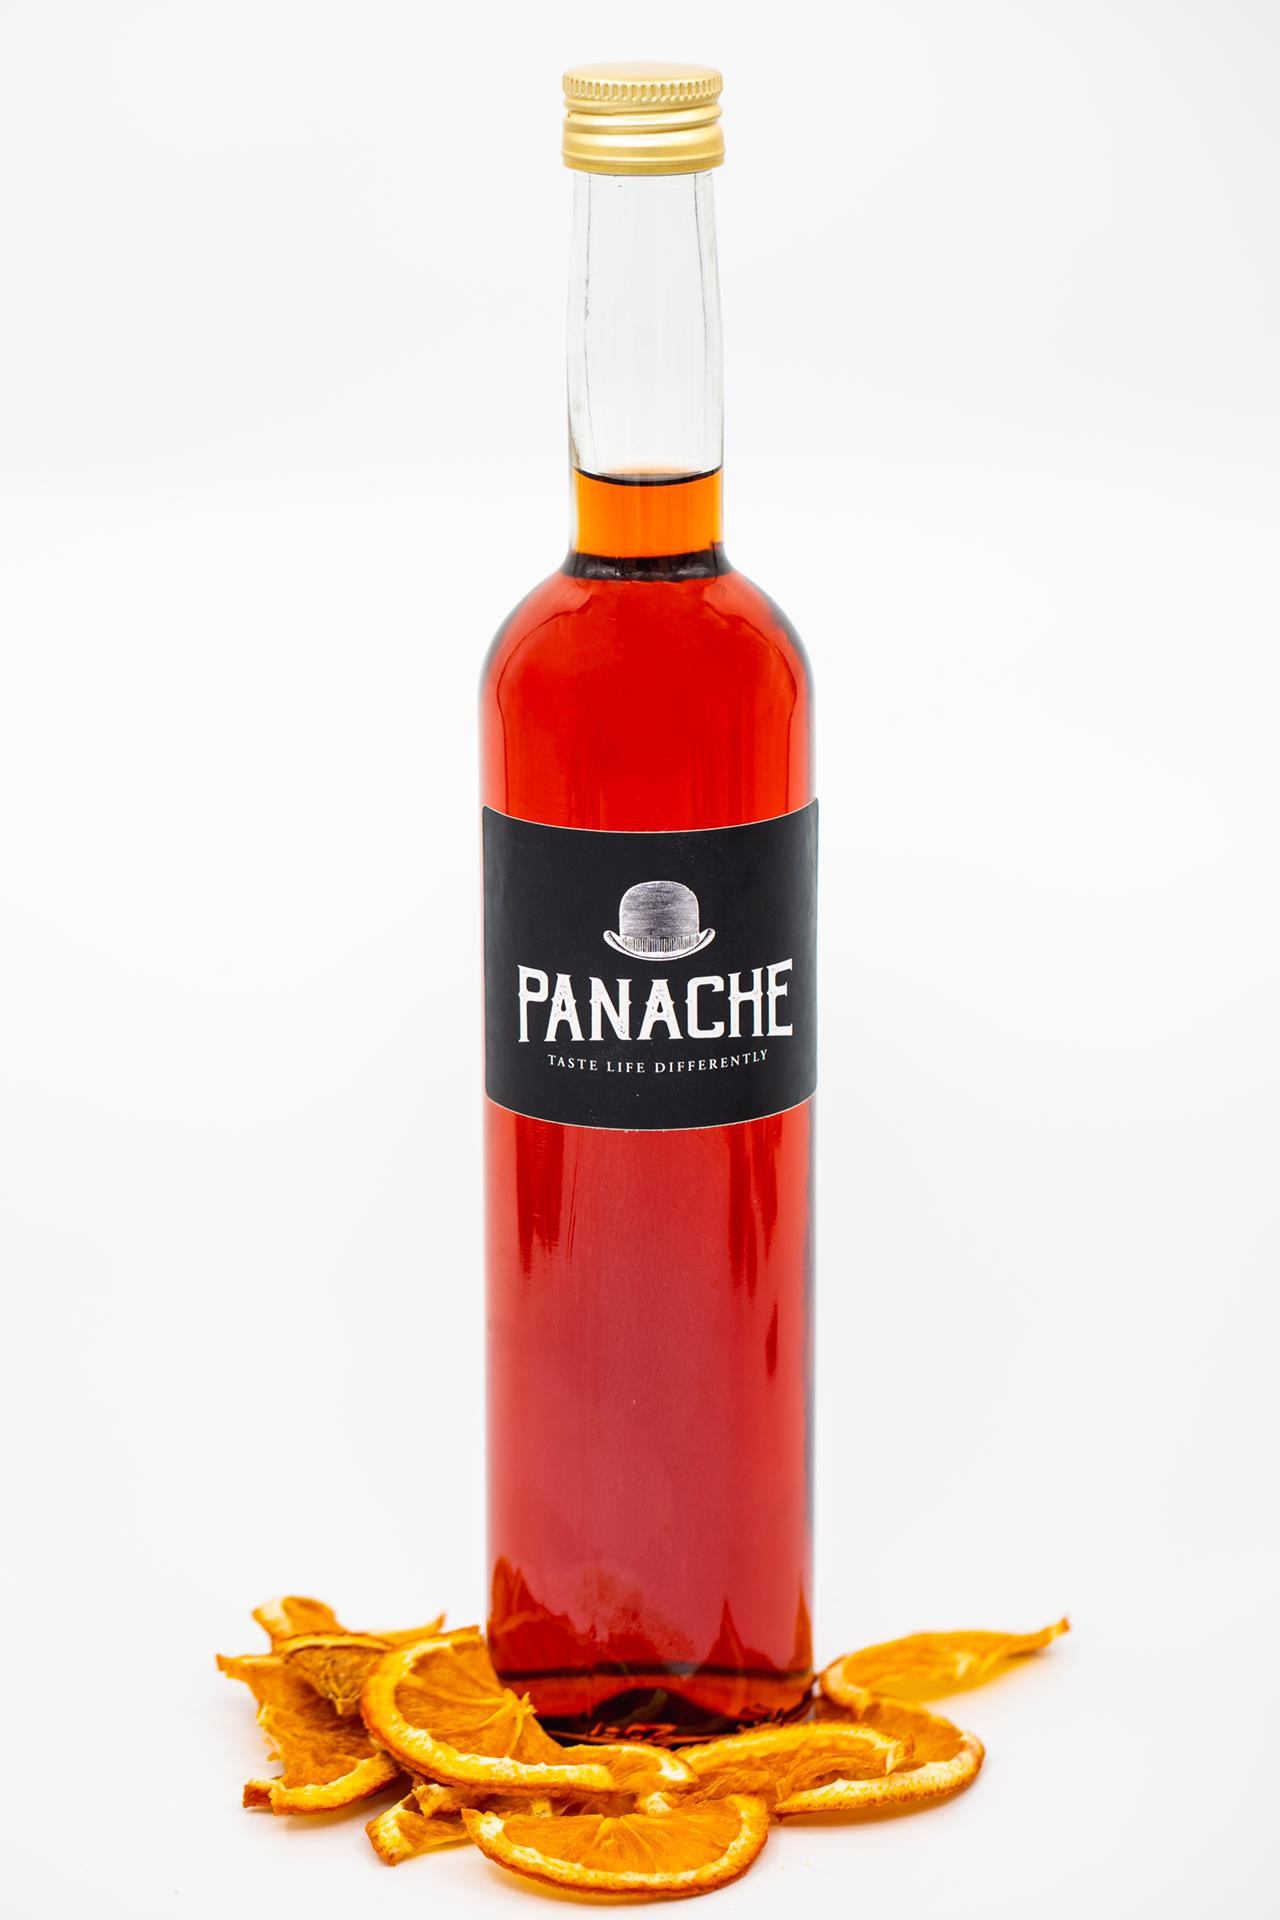 Taste Panache - Negroni - image